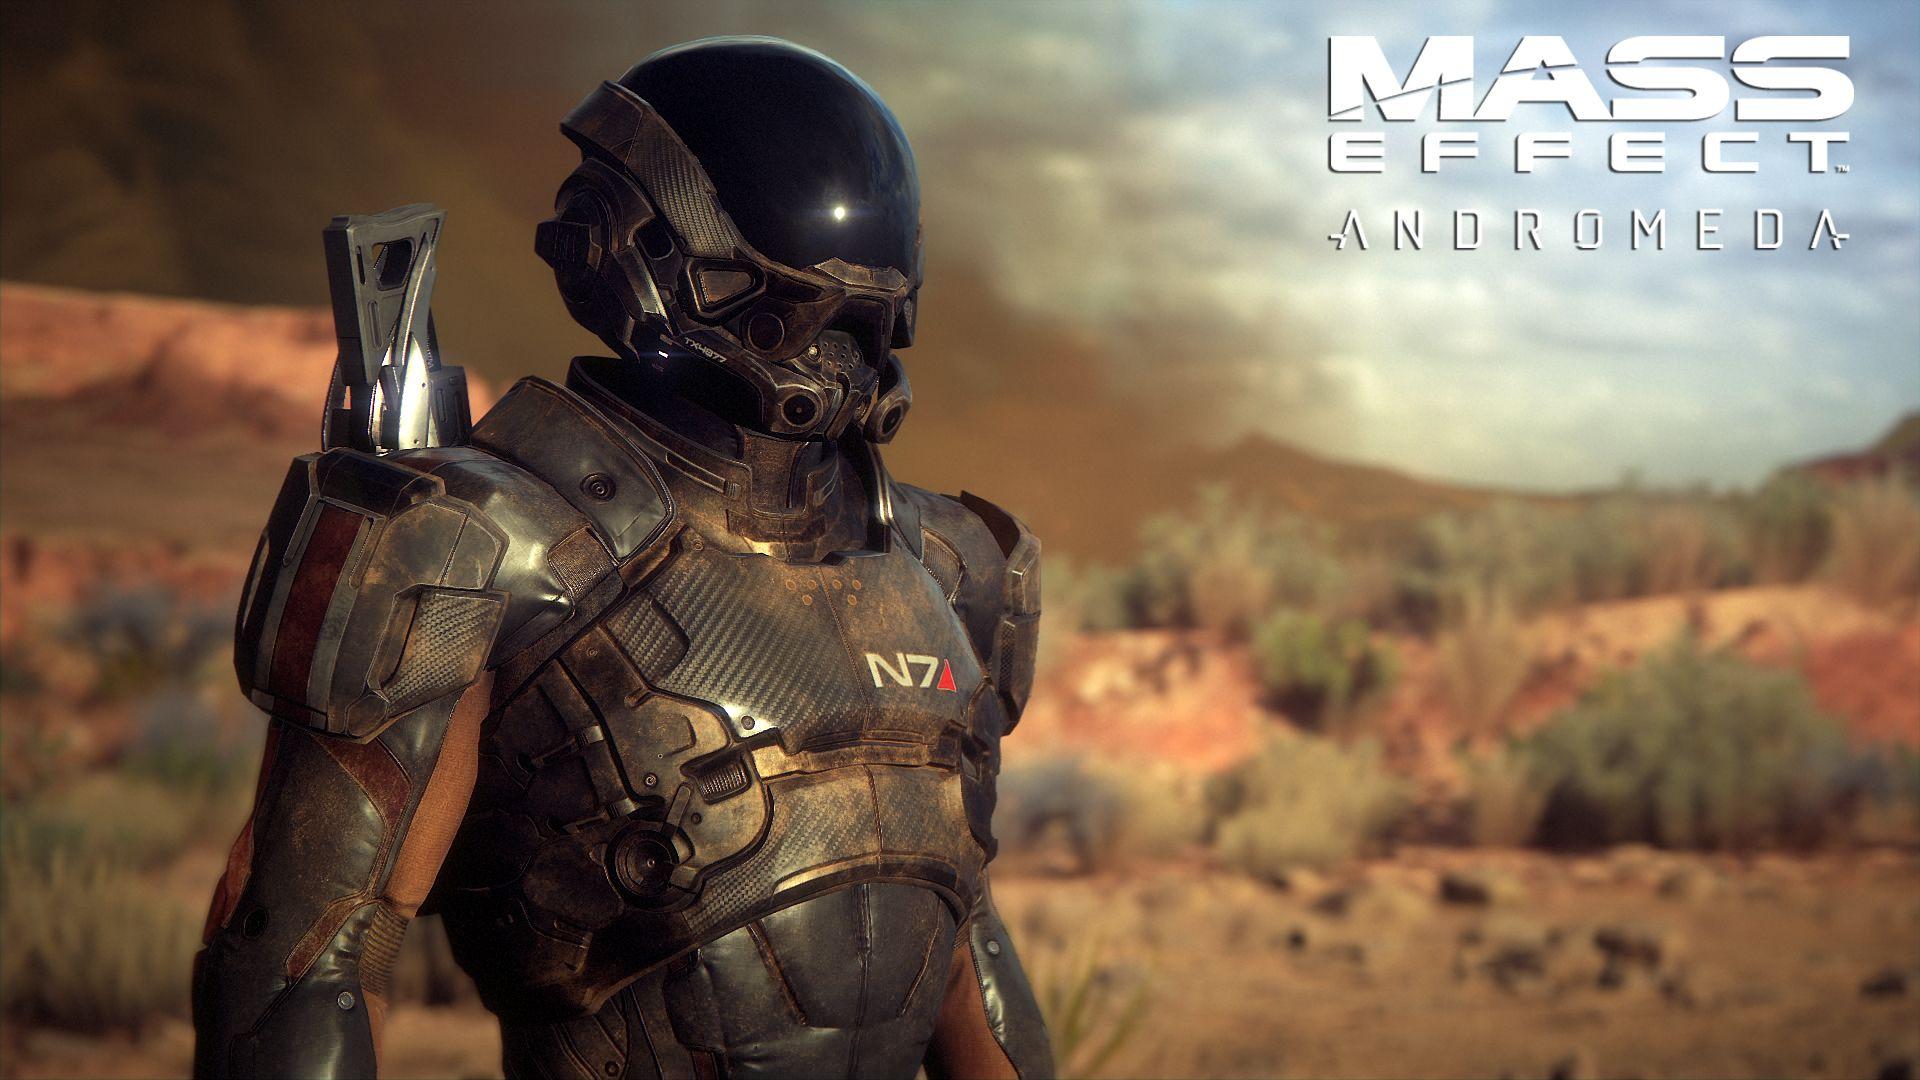 Steam Workshop - Mass Effect: Andromeda Wallpaper